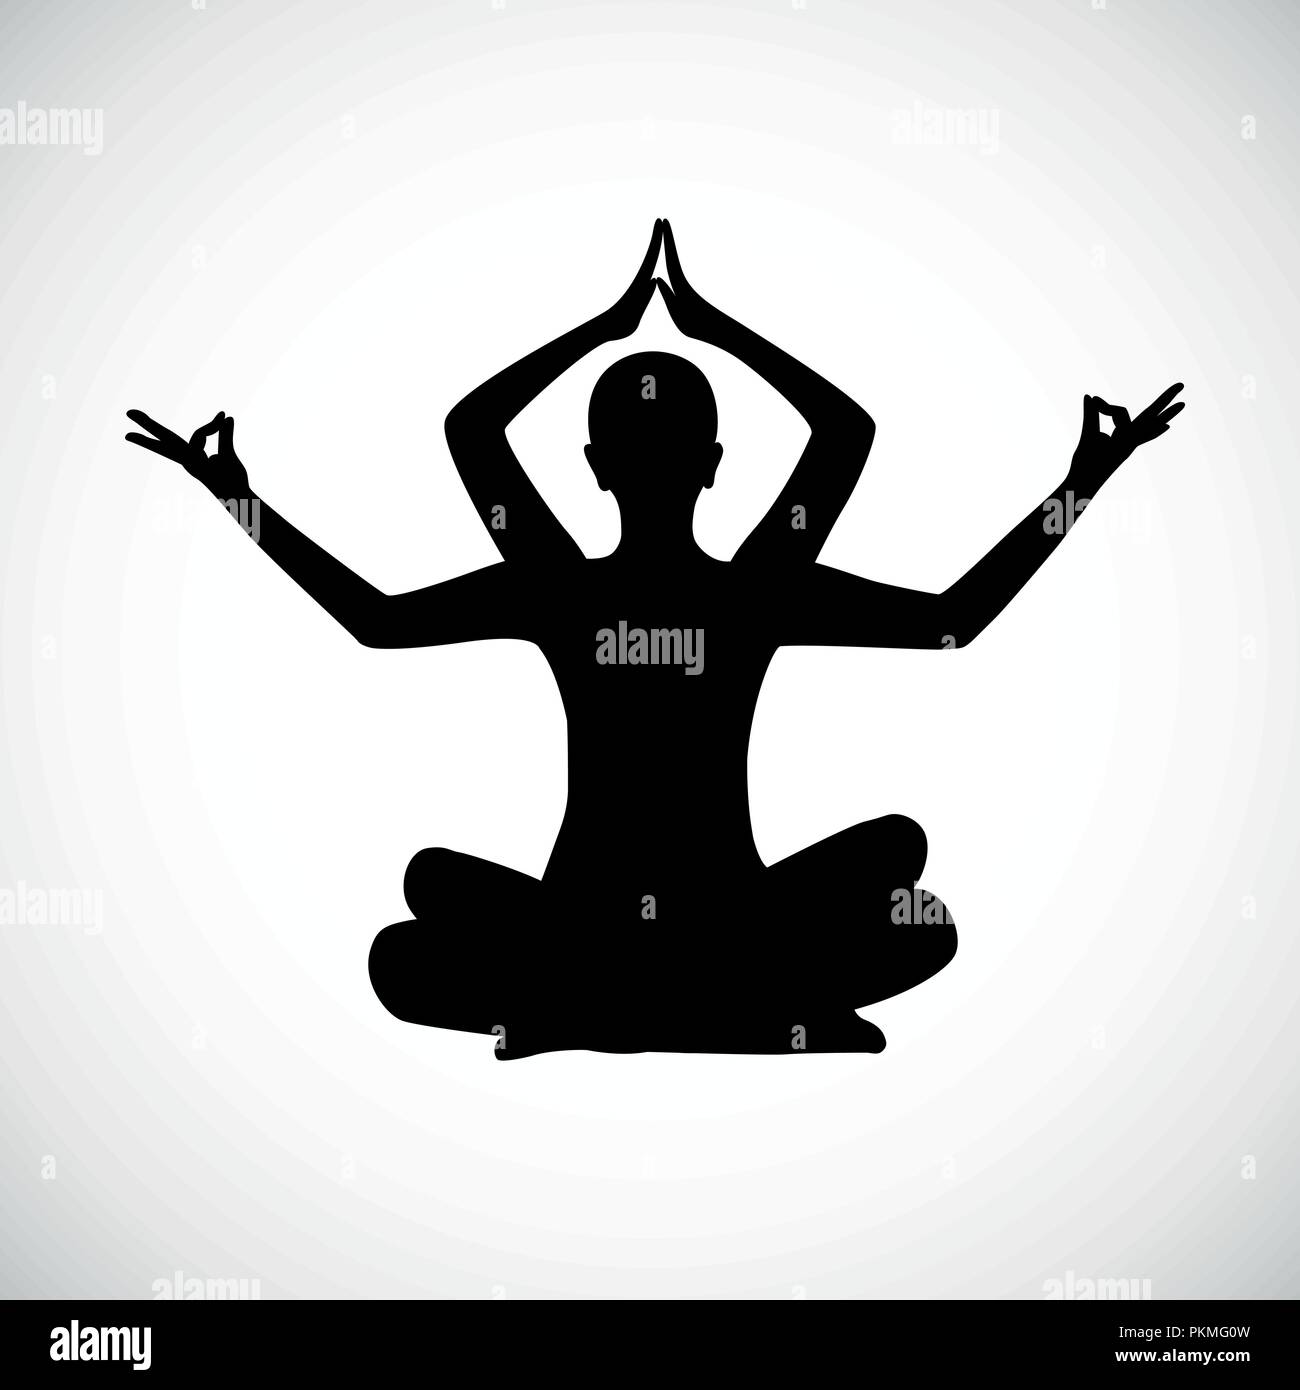 6 Yoga Meditation Poses | Yoga Poses for Meditation